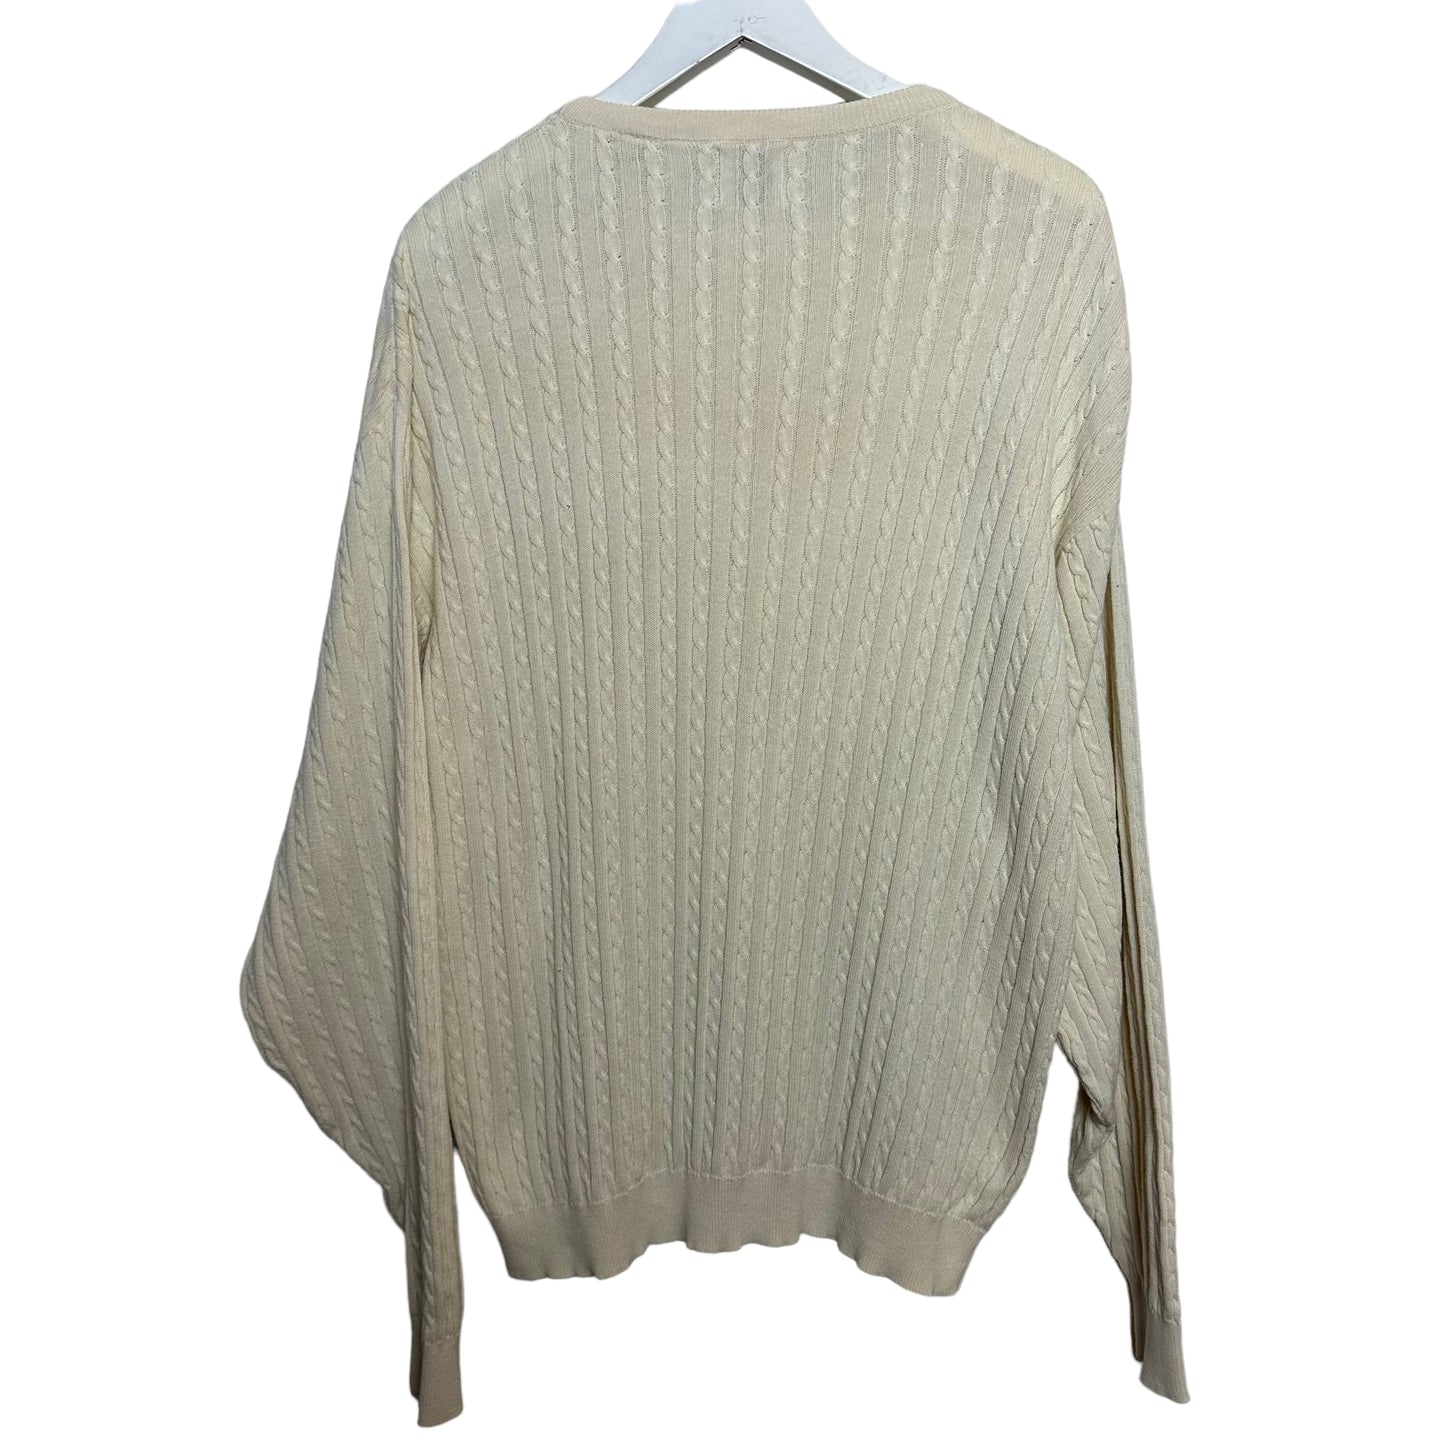 Vintage Gap Cream Cable Knit Sweater Cotton Pullover Crewneck XL